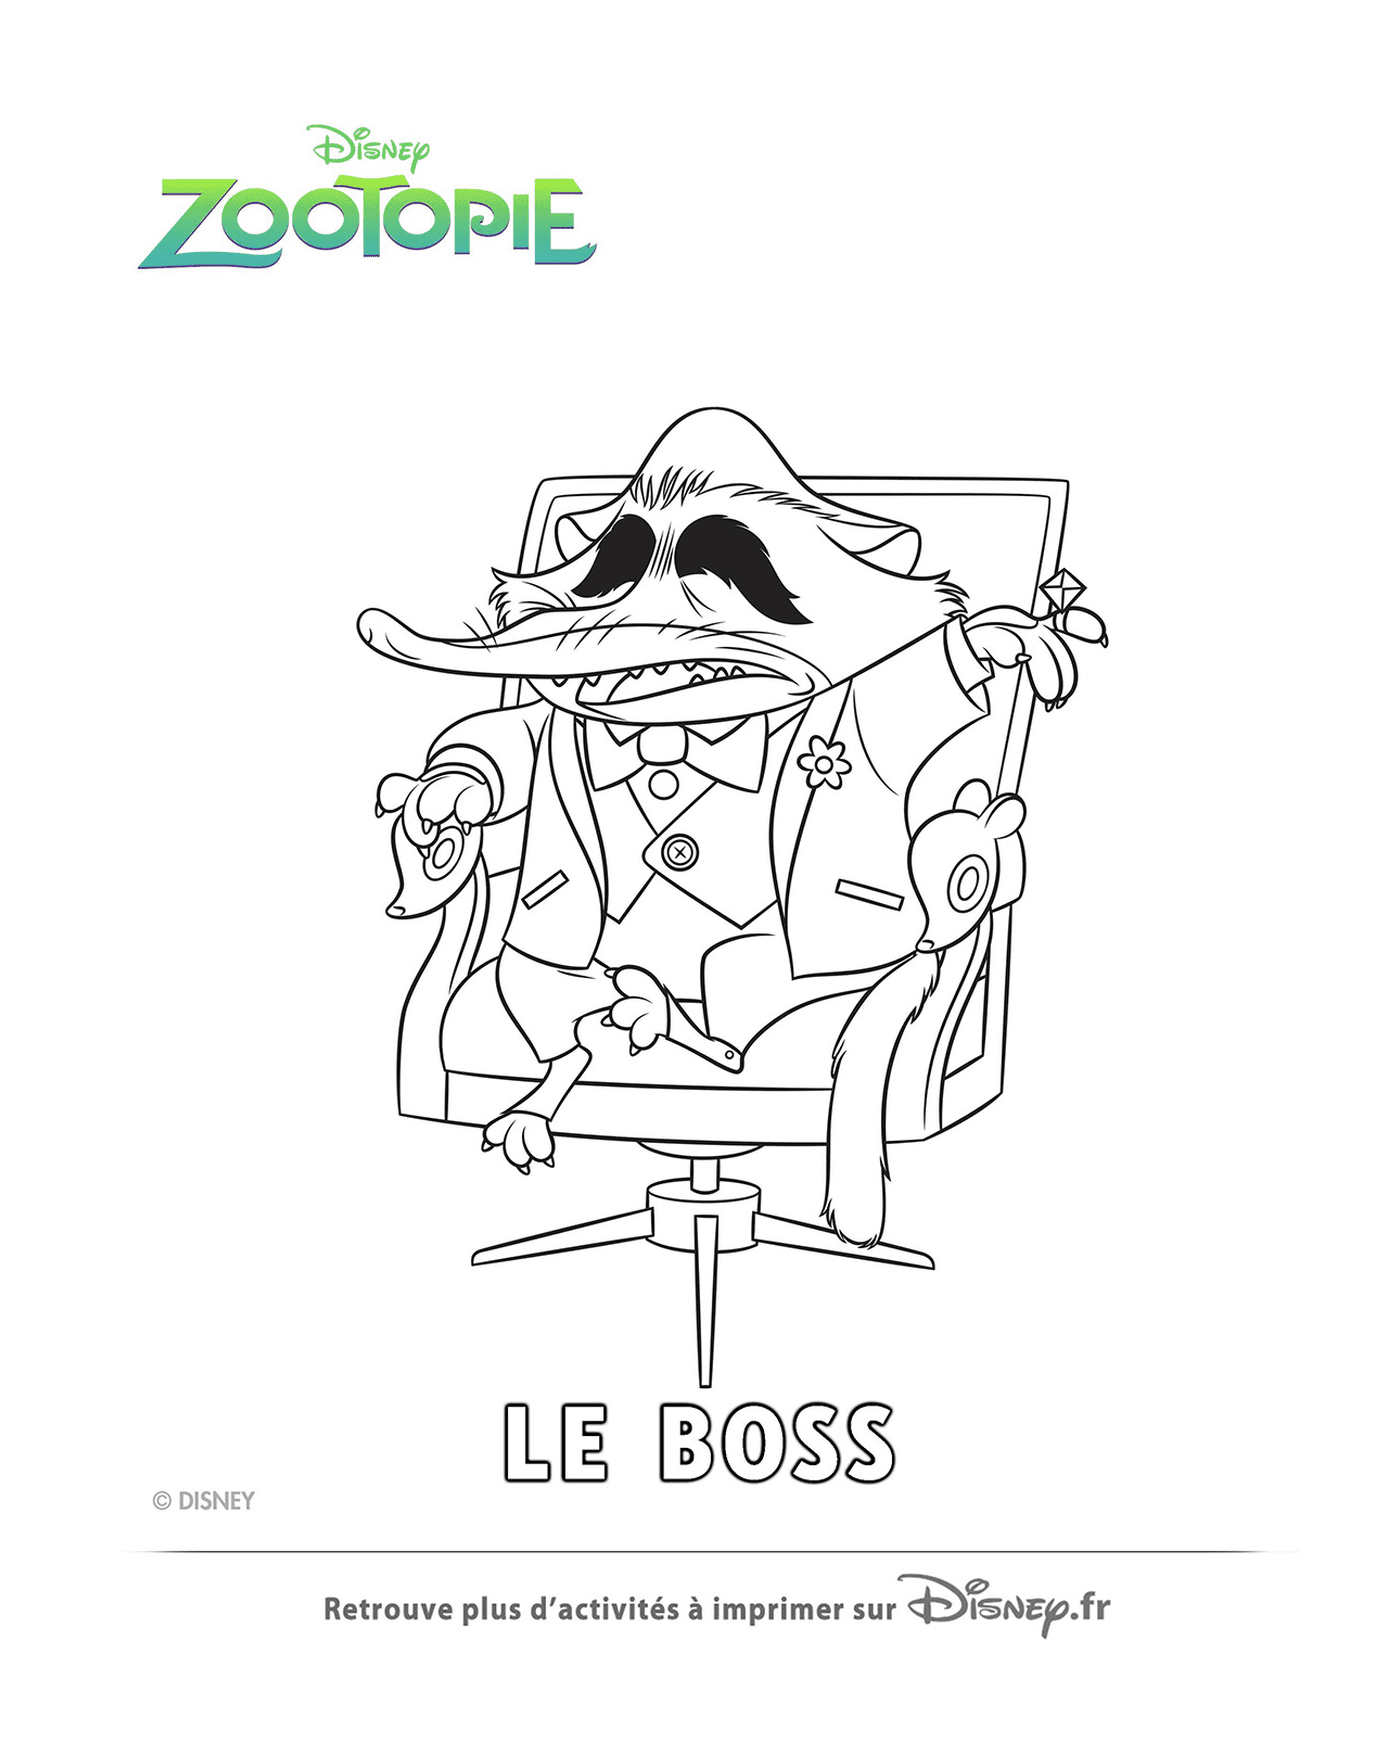  Mr Big, the godfather of the Zootopia mafia 